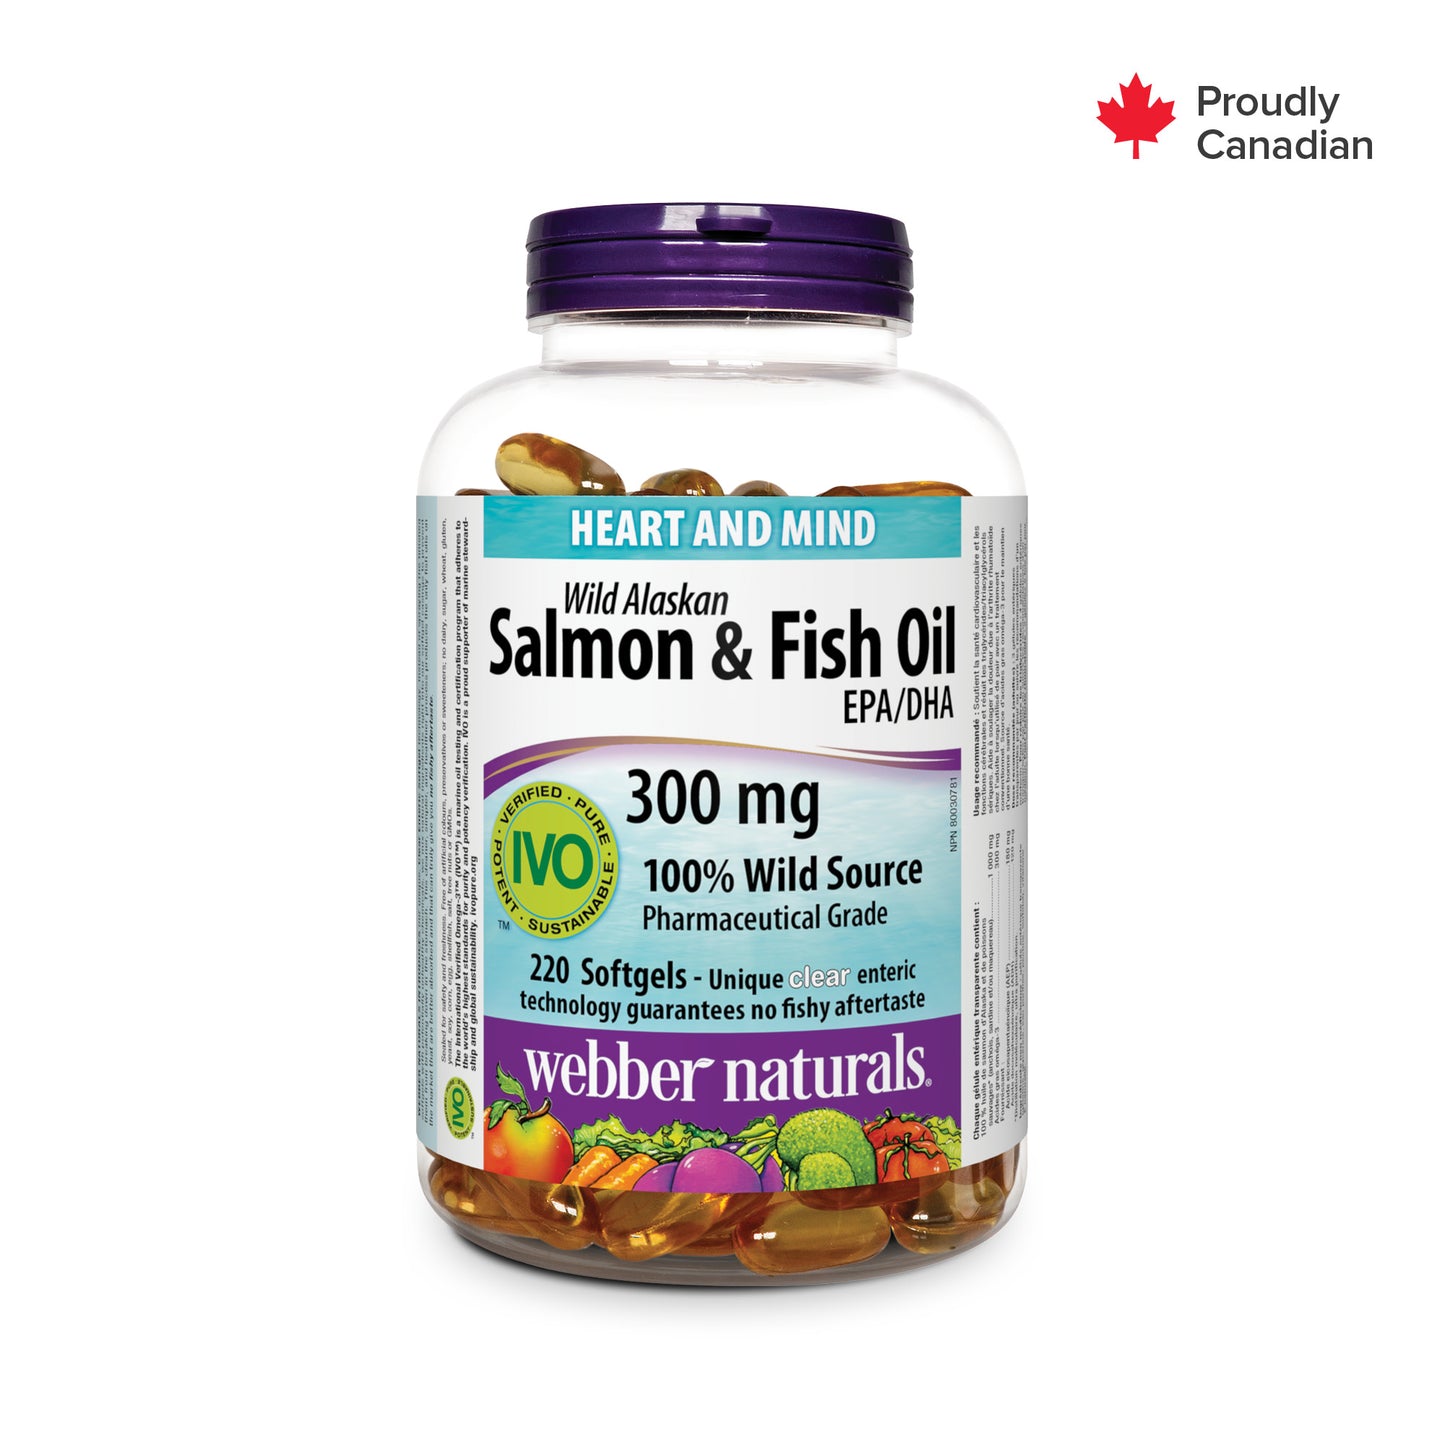 Huile de poissons et de saumon sauvage d’Alaska AEP/ADH 300 mg for Webber Naturals|v|hi-res|WN3398